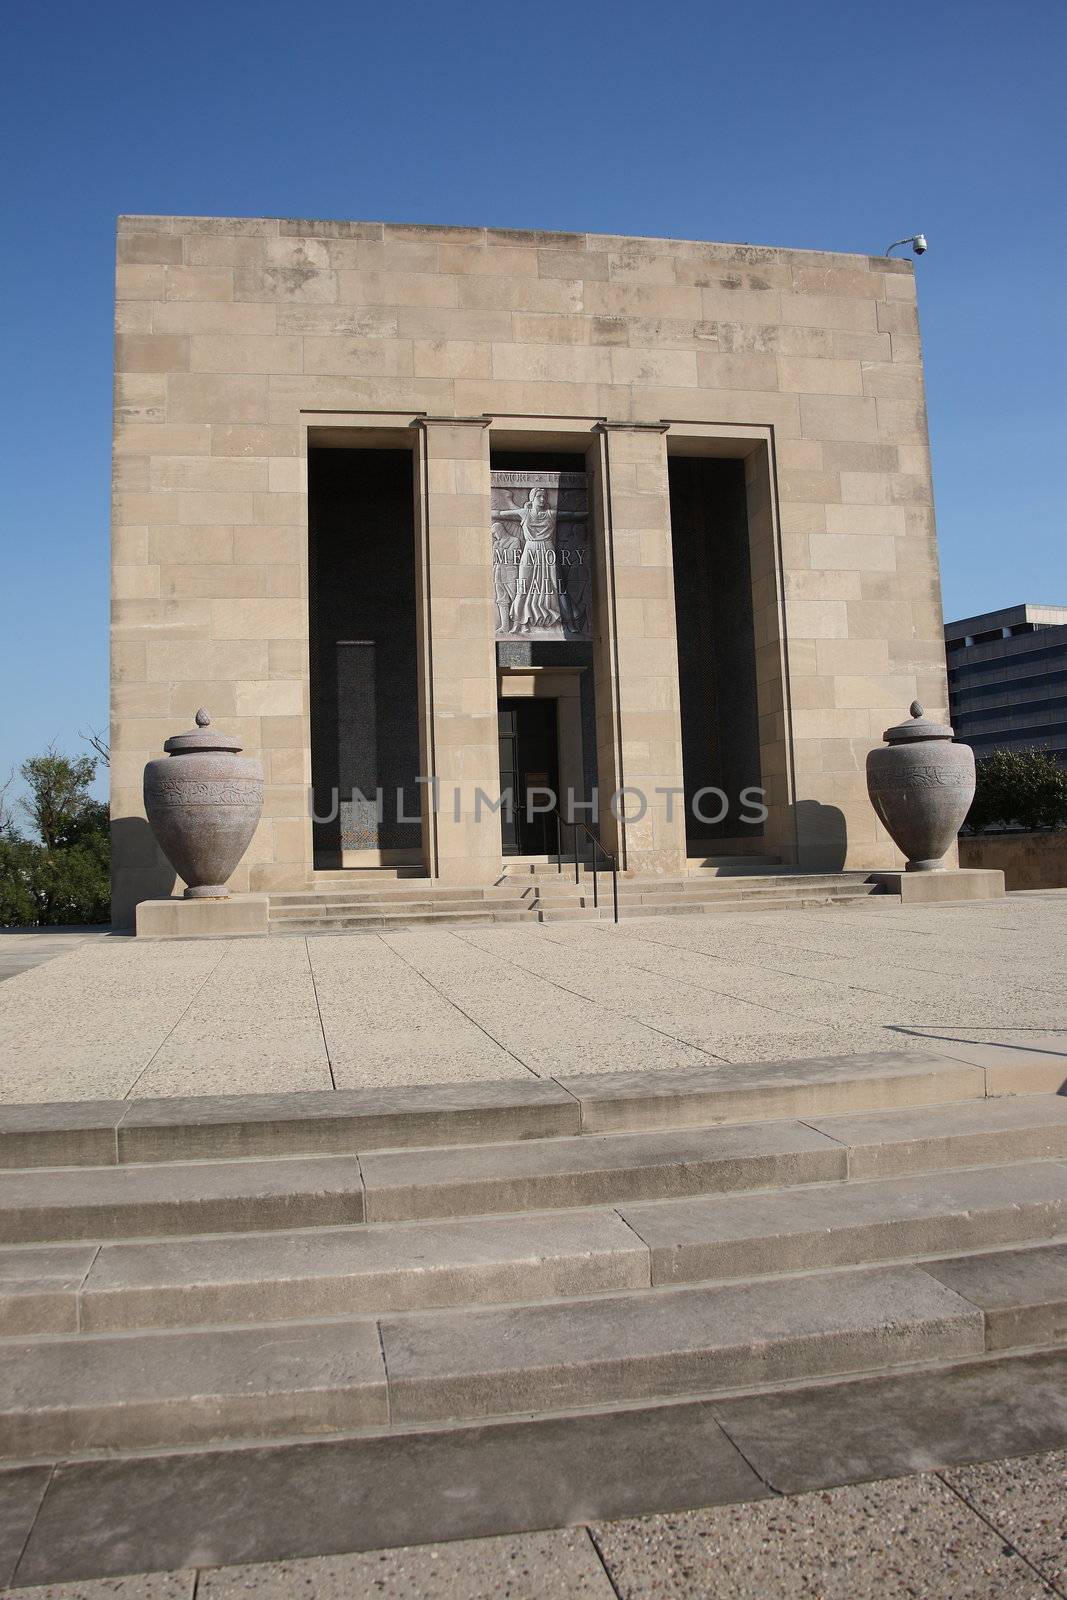 Liberty Memorial - Kansas City by Ffooter